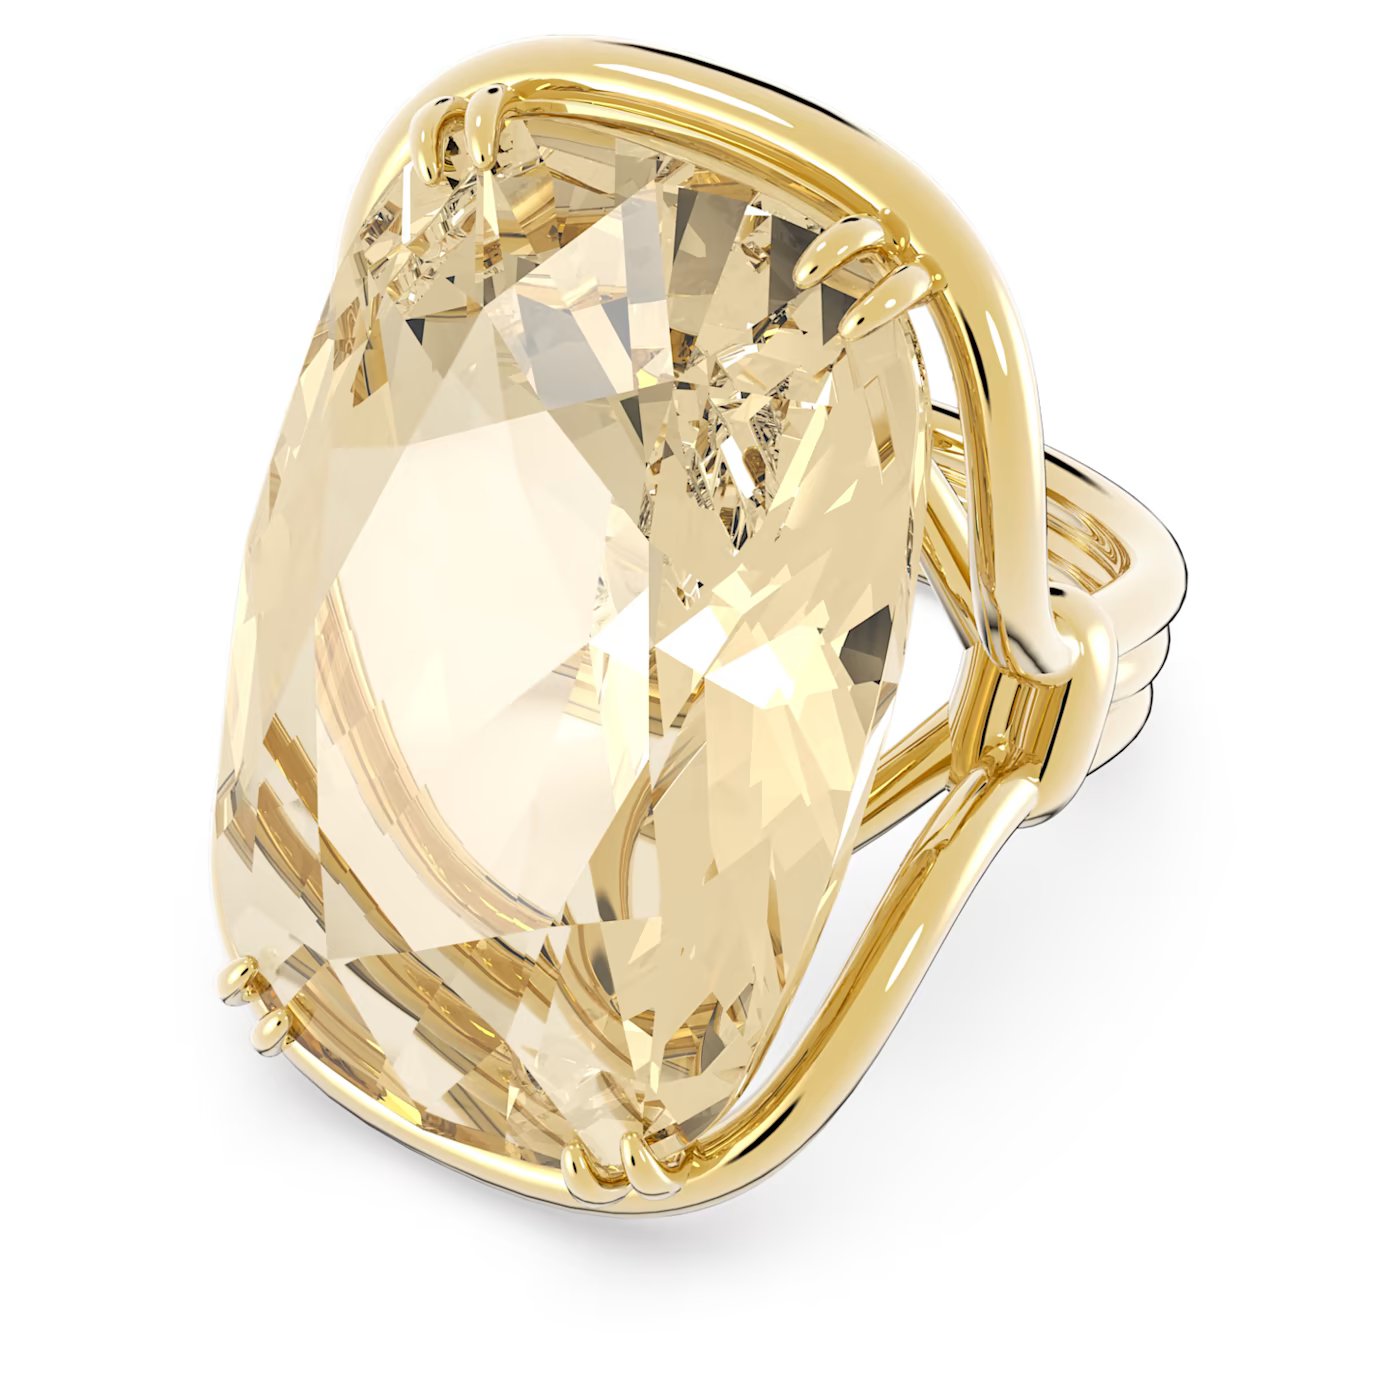 633165e524c27_px-harmonia-cocktail-ring--oversized-crystal--gold-tone--gold-tone-plated-swarovski-5640042 (6).jpg